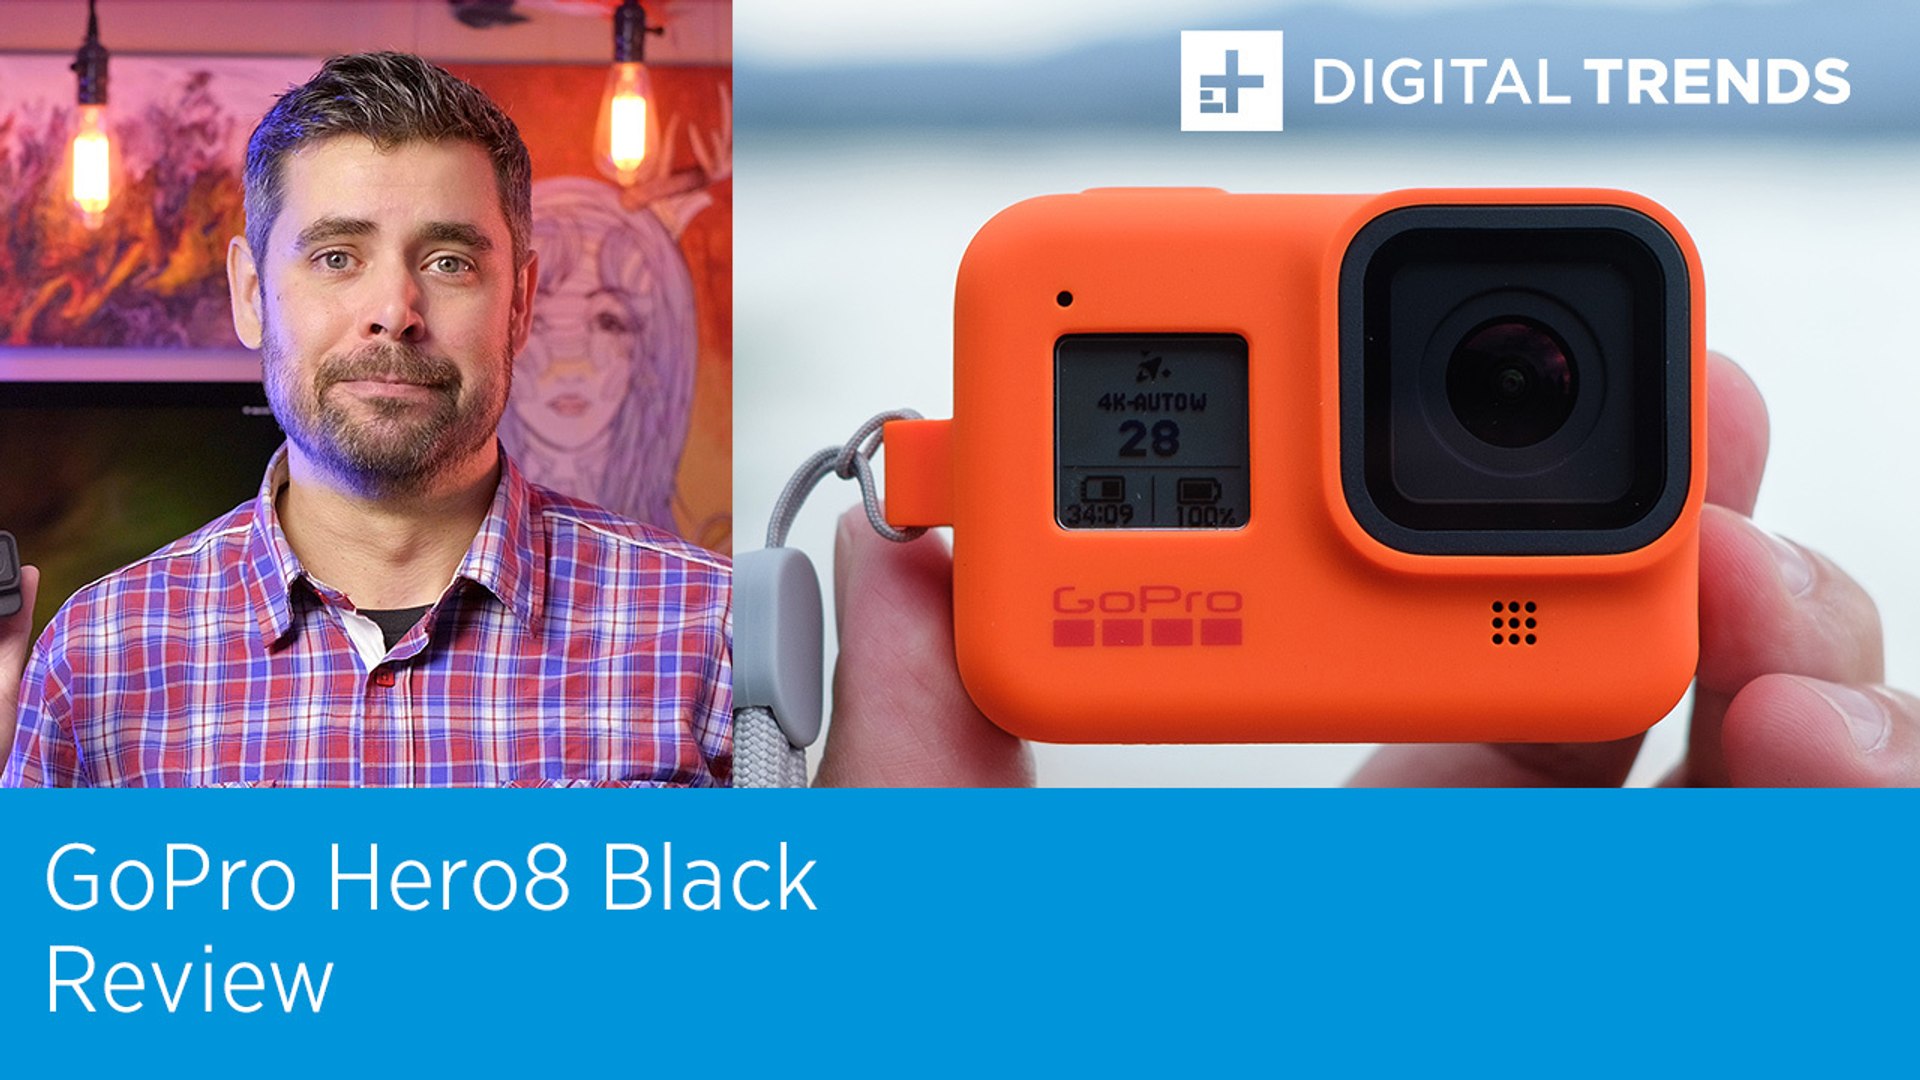 GoPro Hero8 Black review